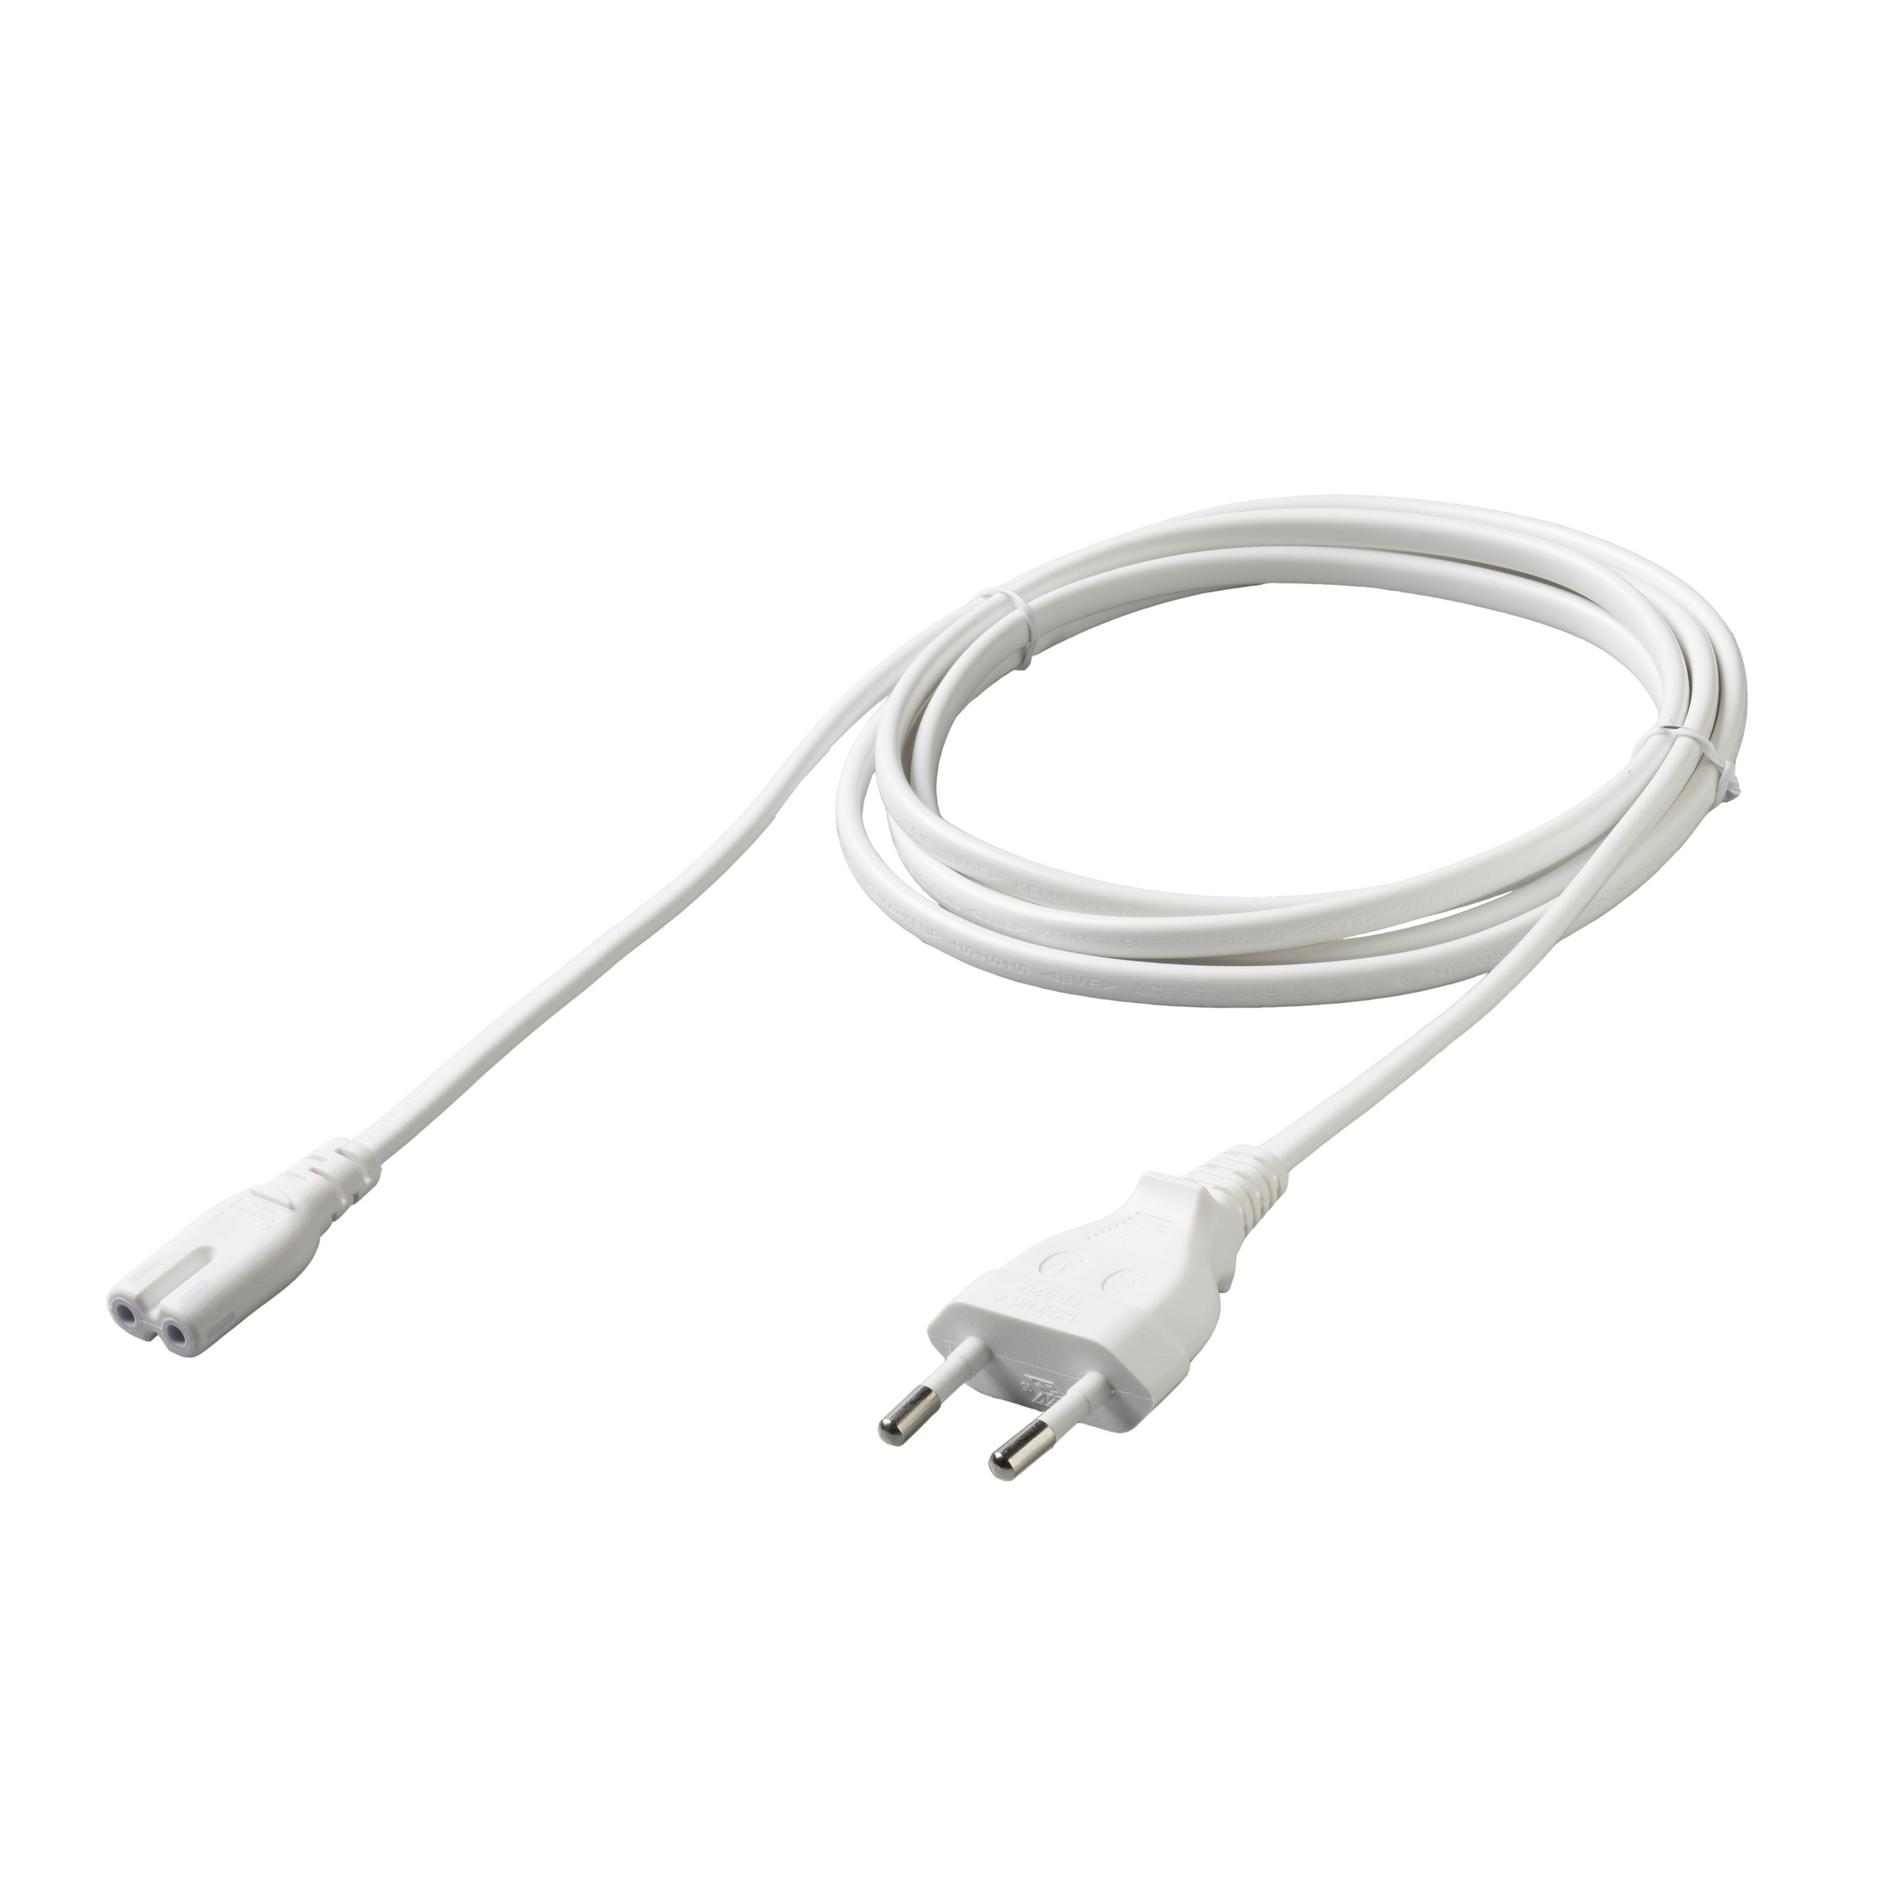 Sunny C7 Europe (2PIN power cord) 1.8m apple white